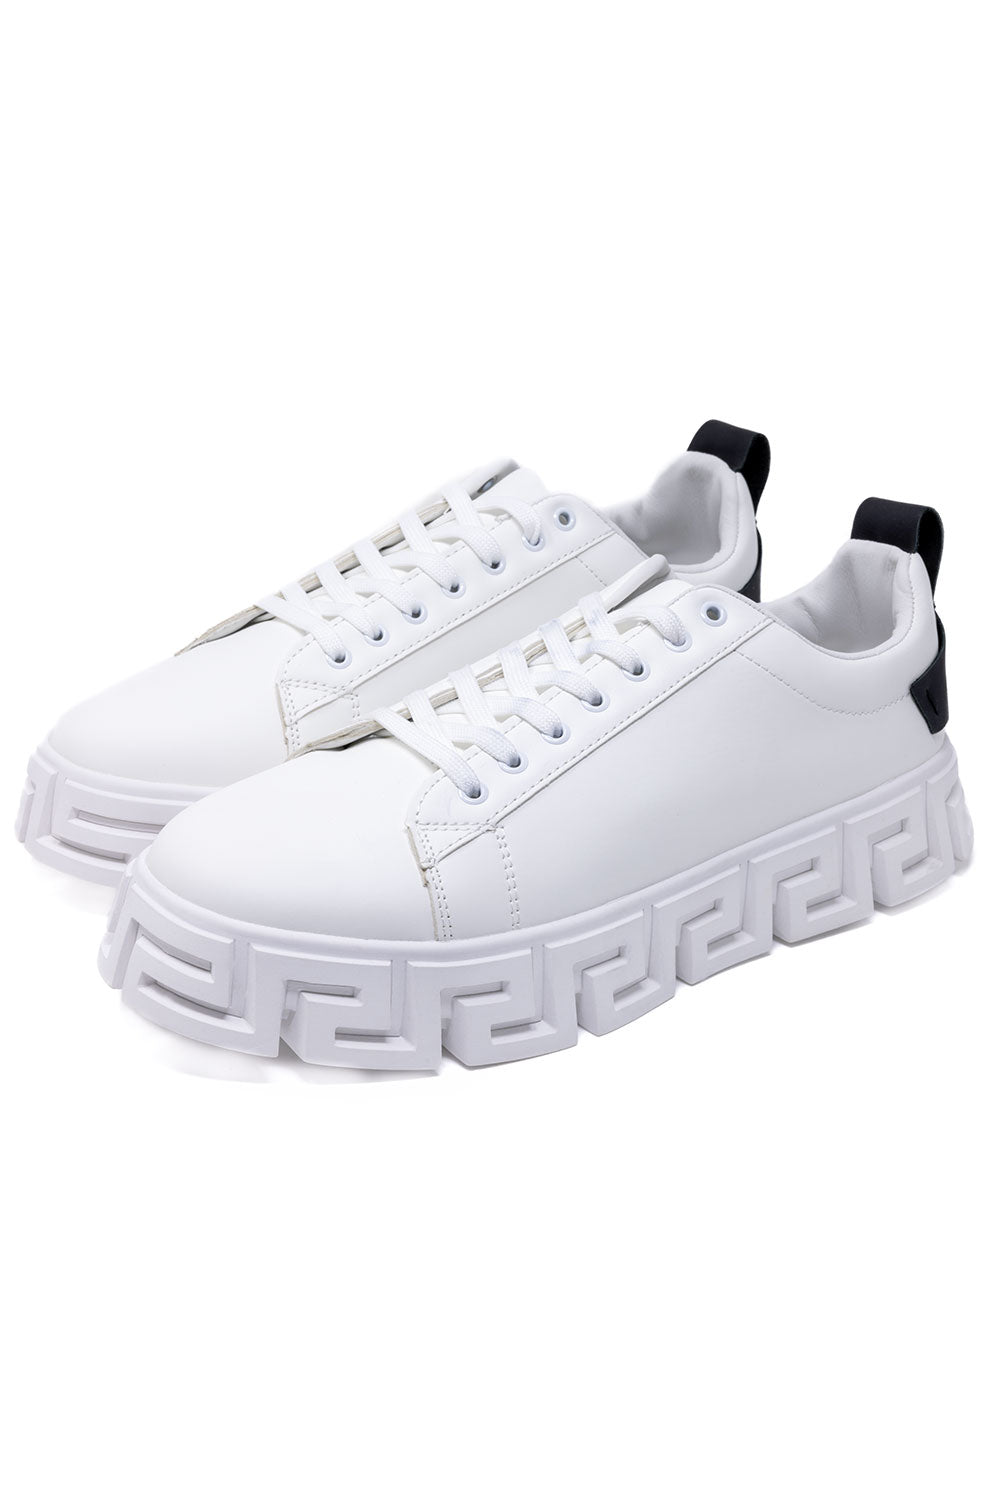 Barabas Men's Wholesale  Greek Key Sole Pattern Premium Sneakers 4SK06 White